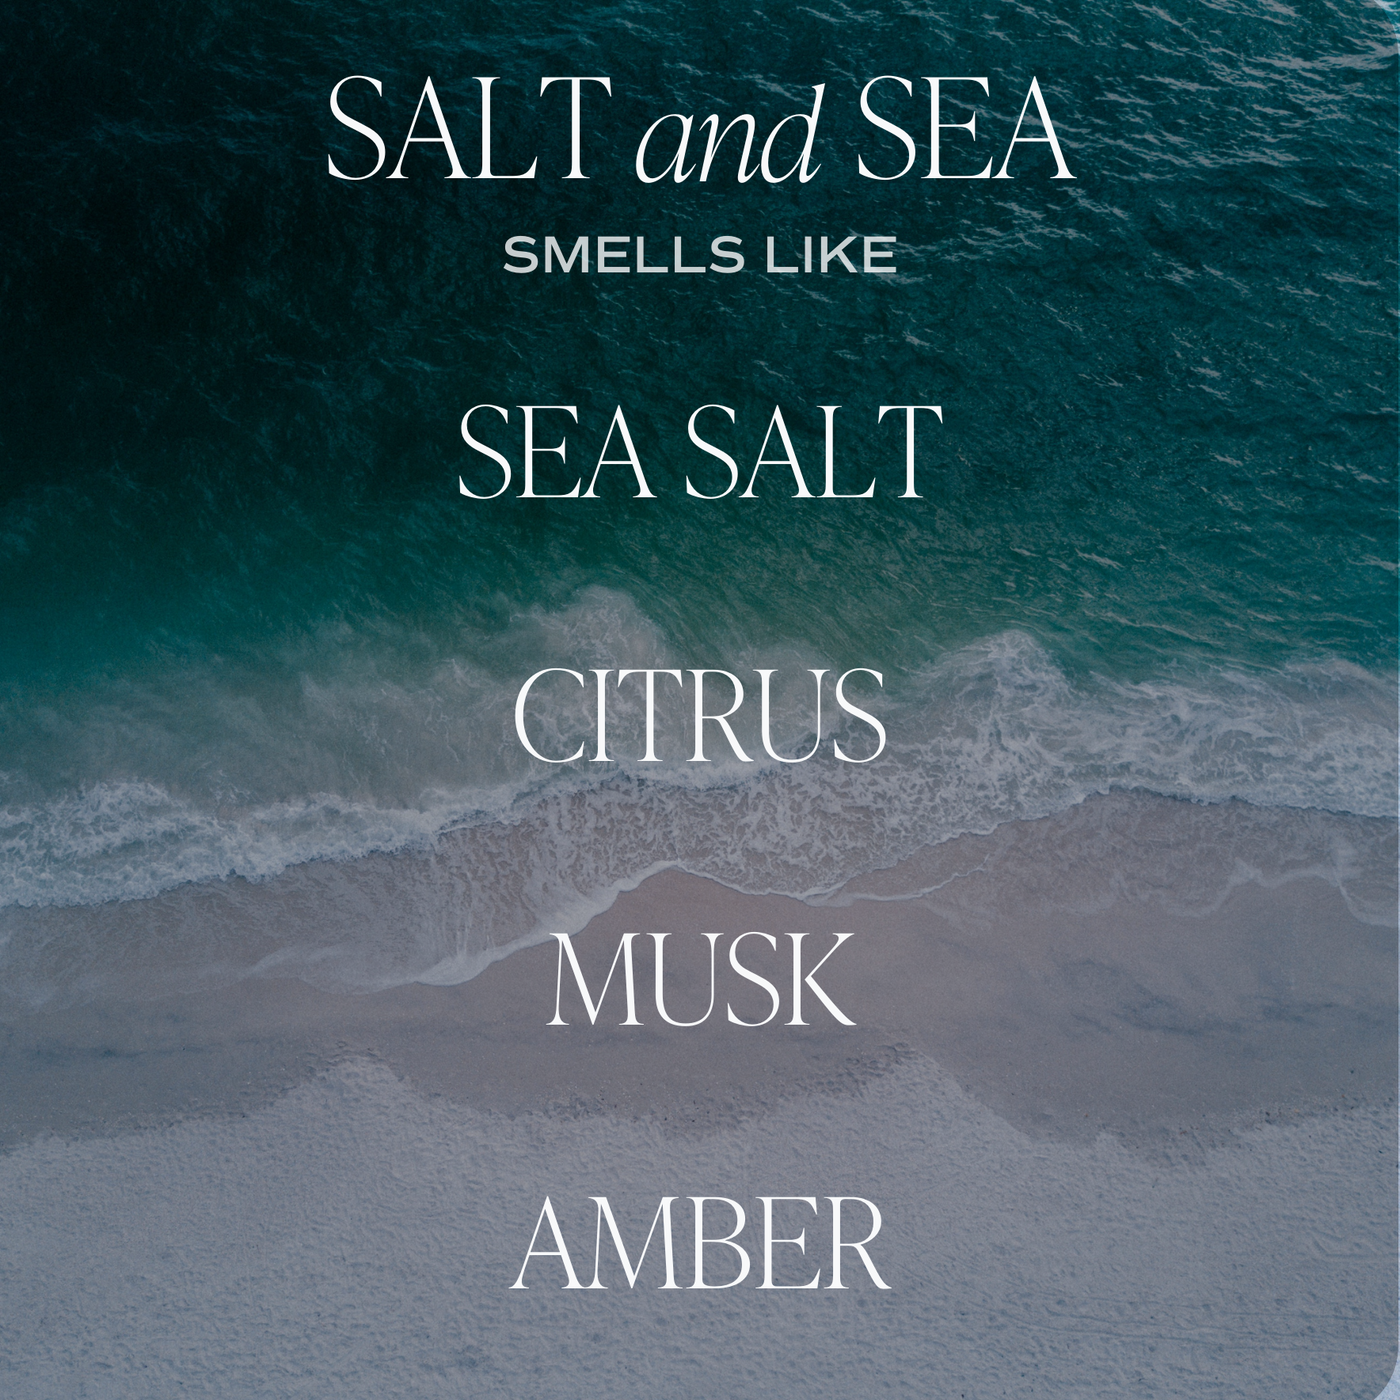 Salt and Sea Soy Candle - Tan Matte Jar - 15 oz